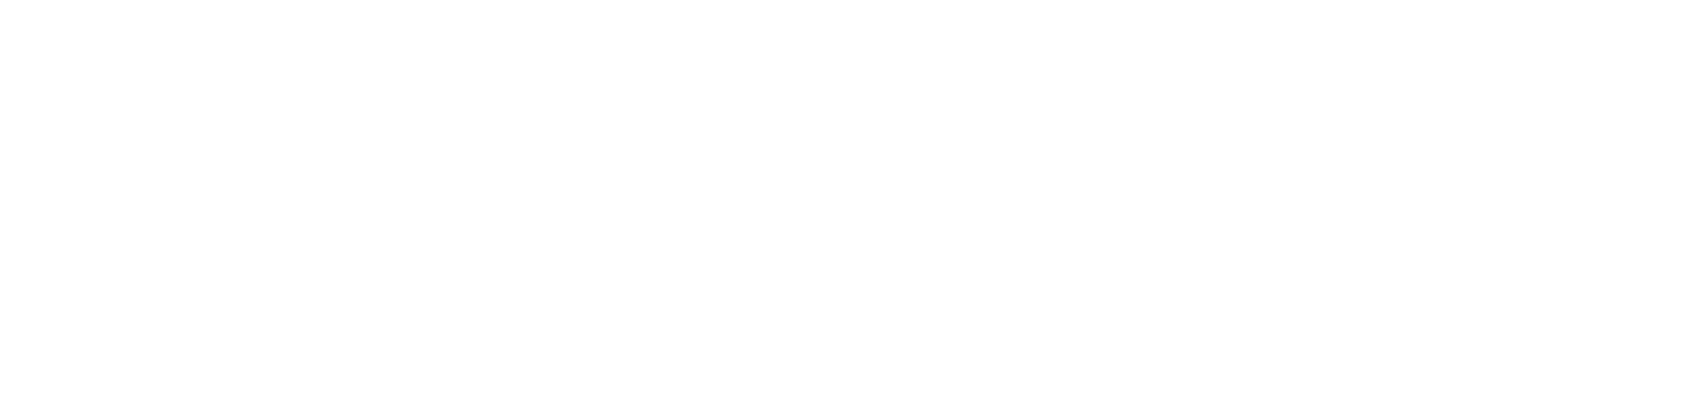 logo-aspect-bw